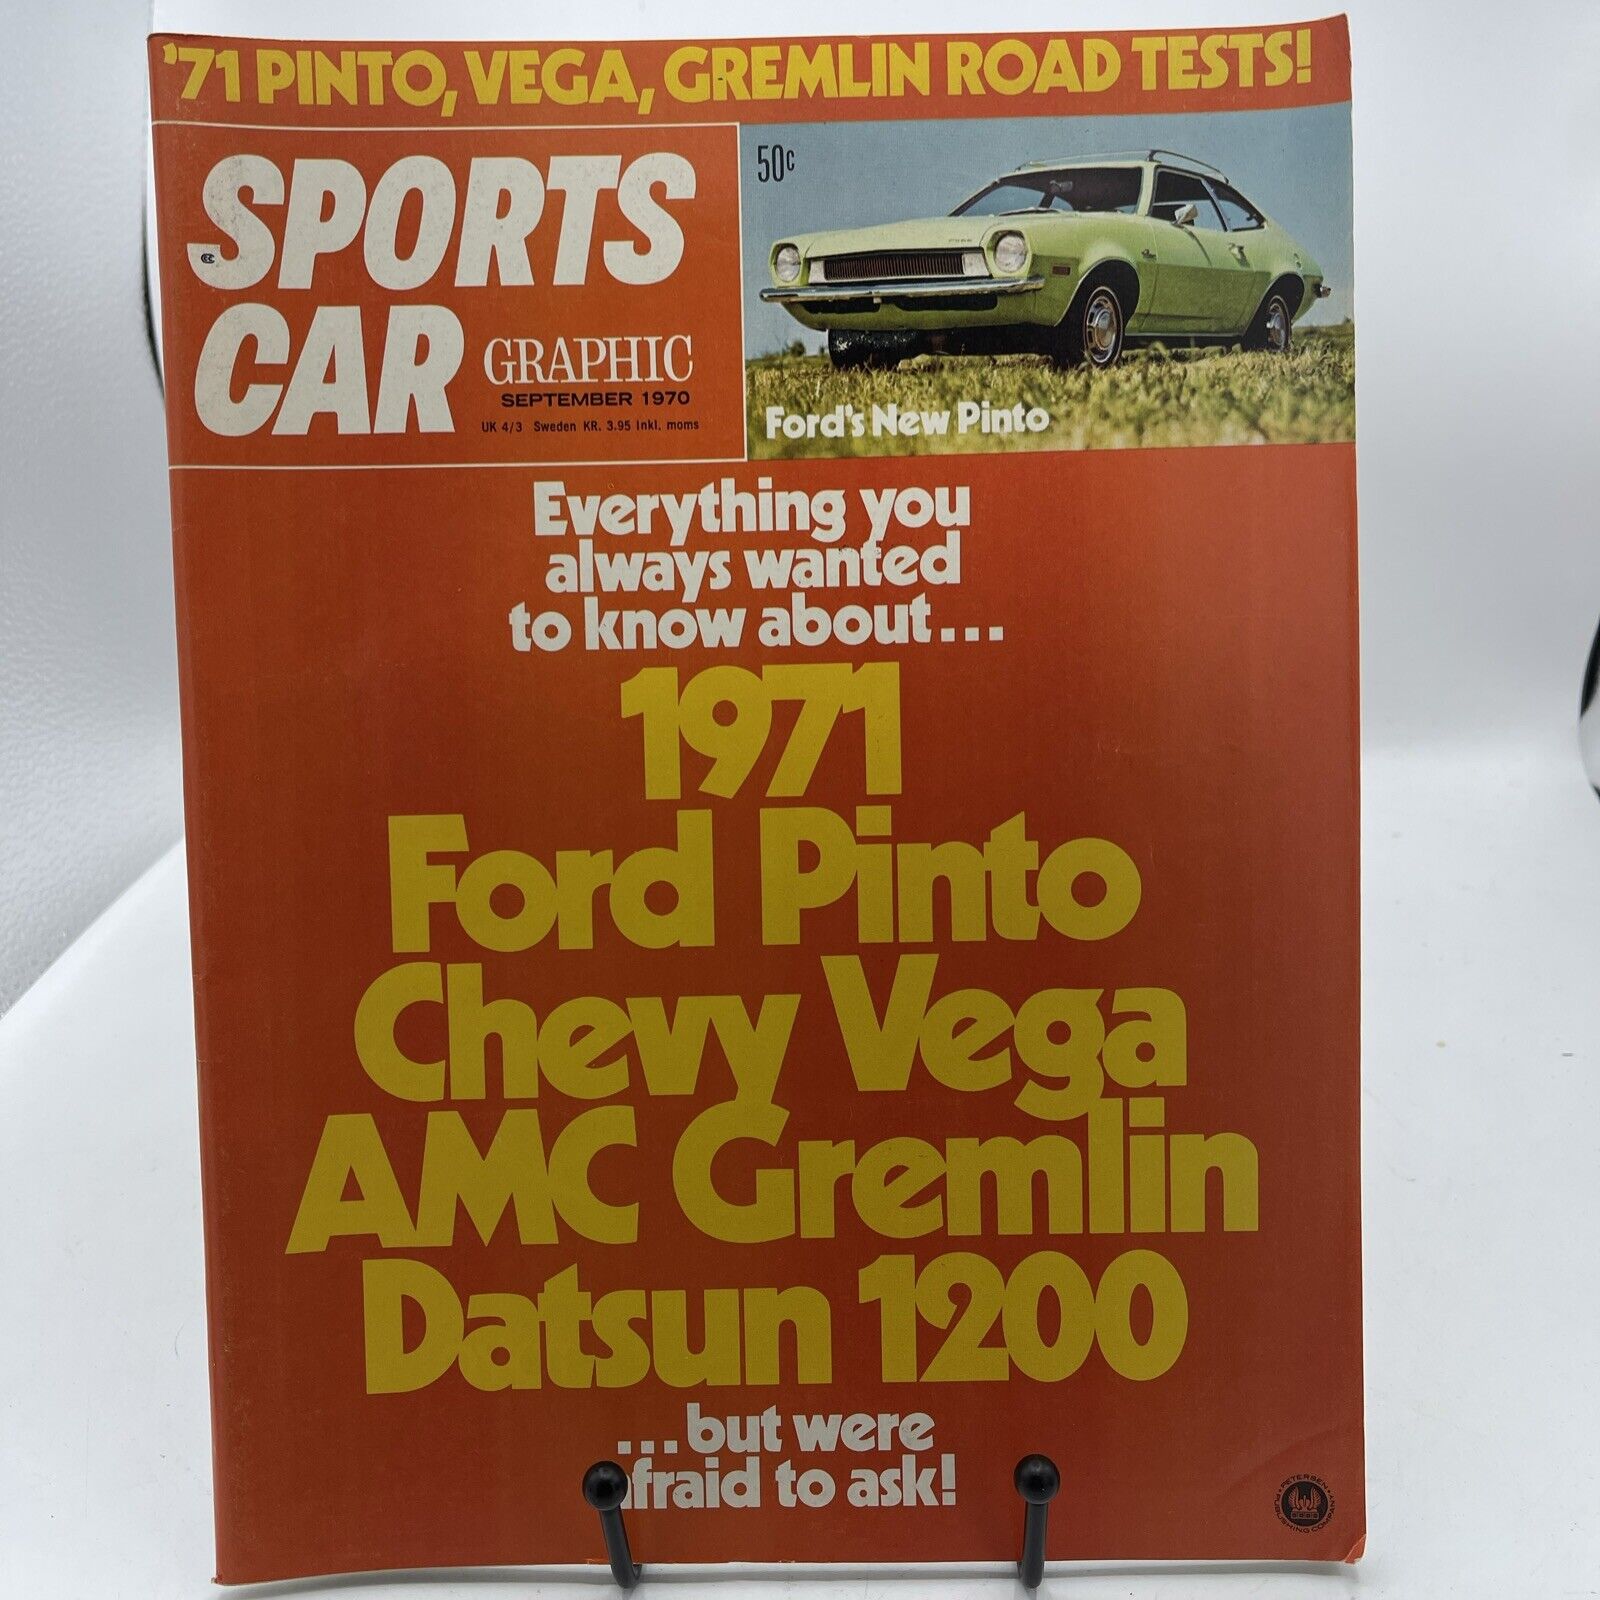 SEPTEMBER 1970 SPORTS CAR GRAPHIC MAGAZINE, FORD PINTO, CHEVY VEGA, AMC GREMLIN